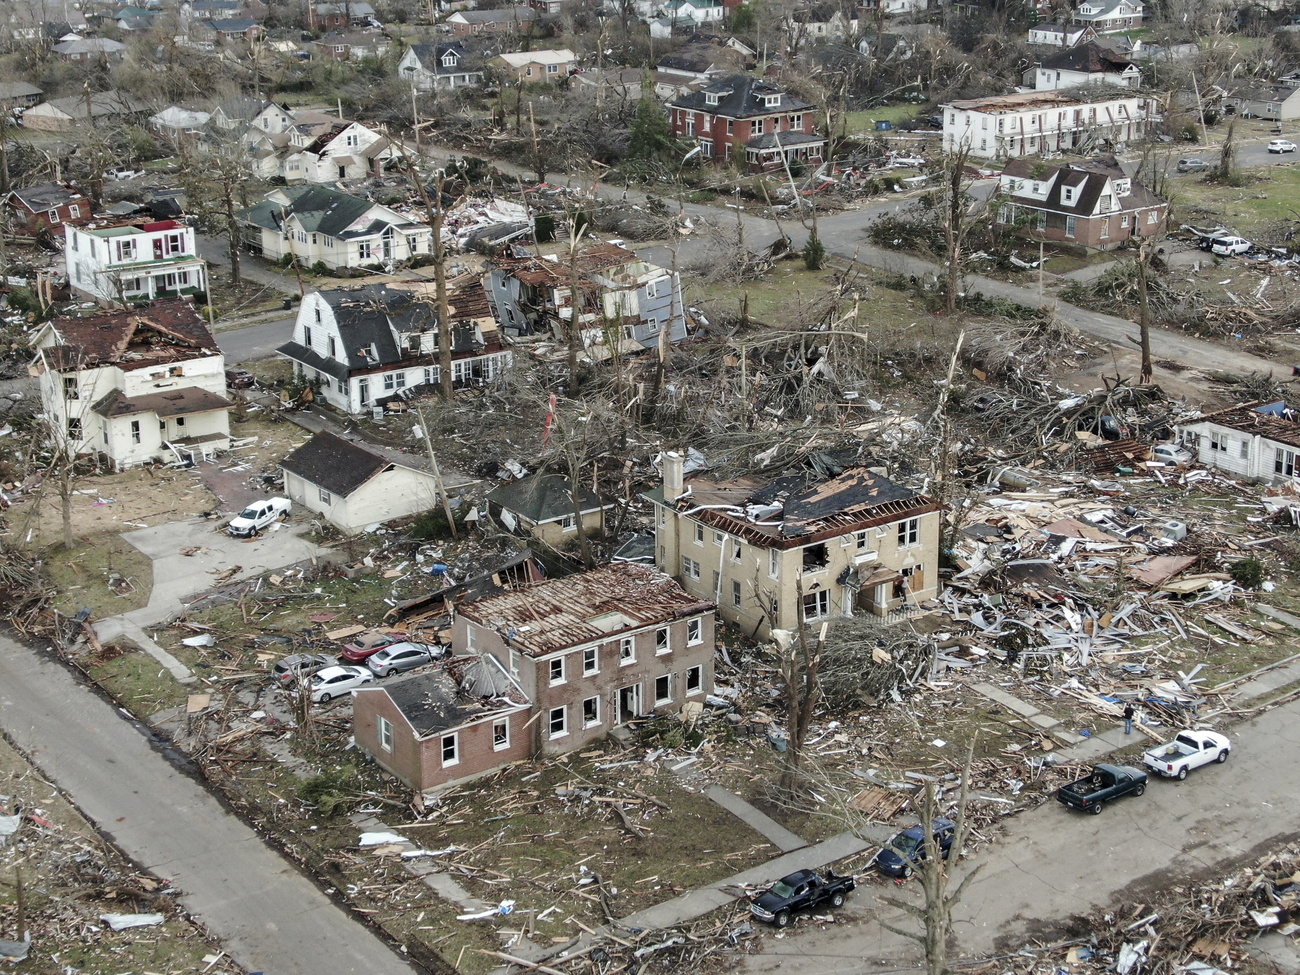 La città di Mayfield nel Kentucky praticamente distrutta dal tornado.